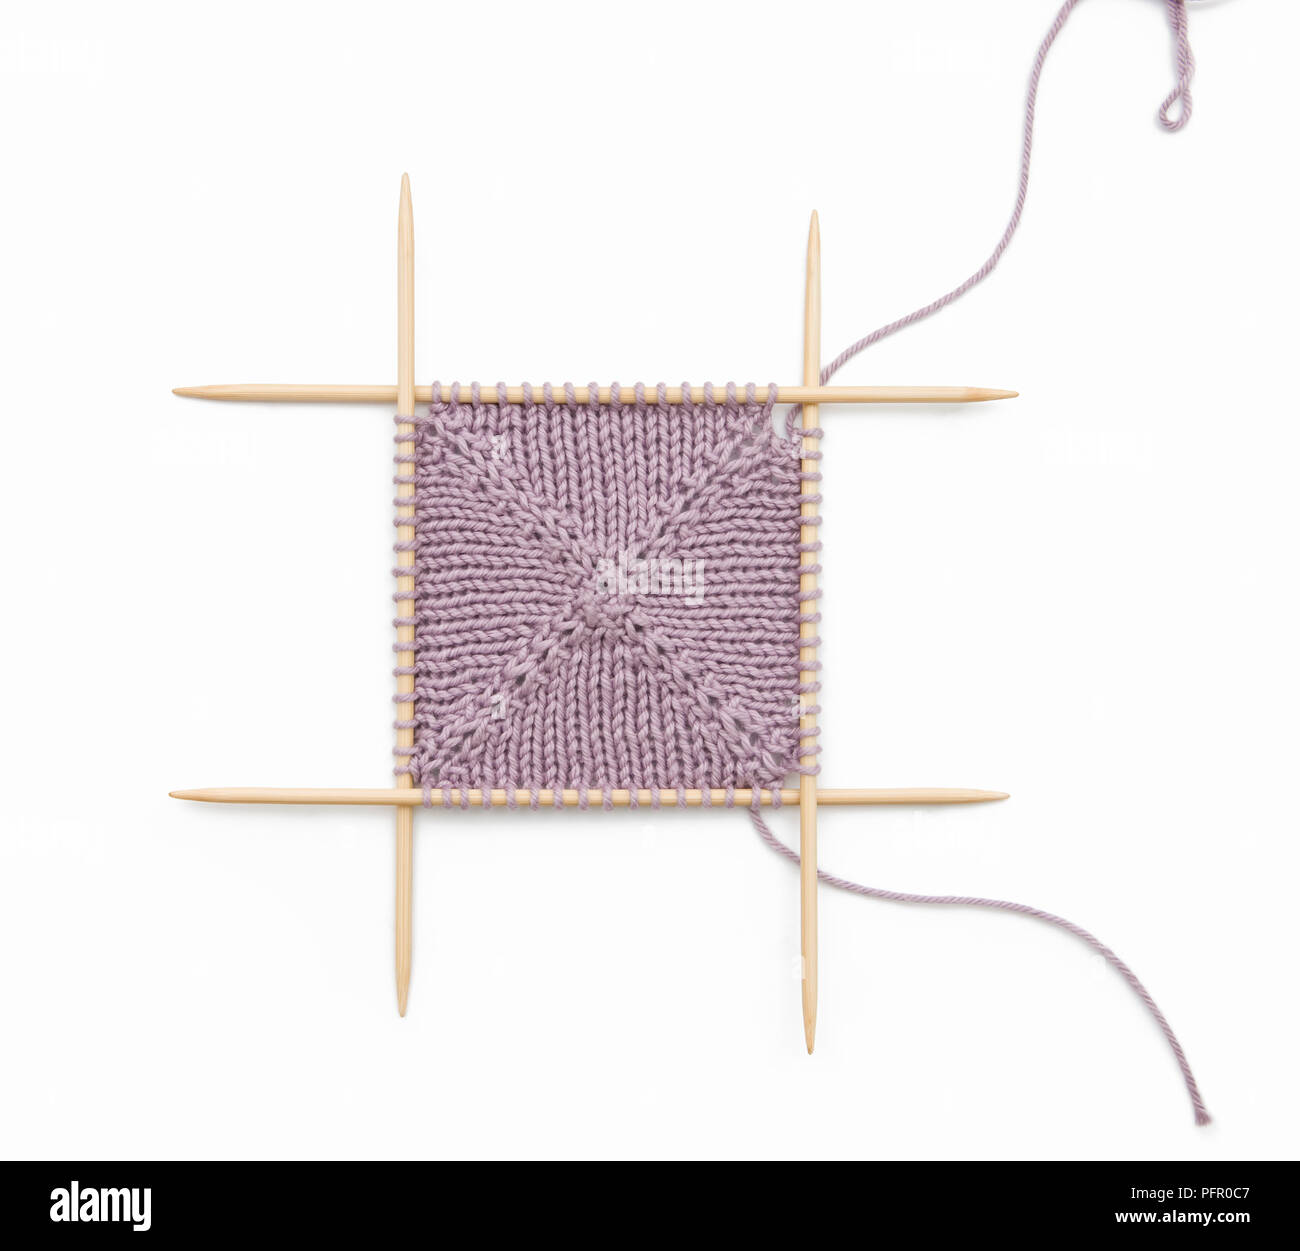 Púrpura tejido cuadrado dentro de cuatro agujas de doble punta Foto de stock